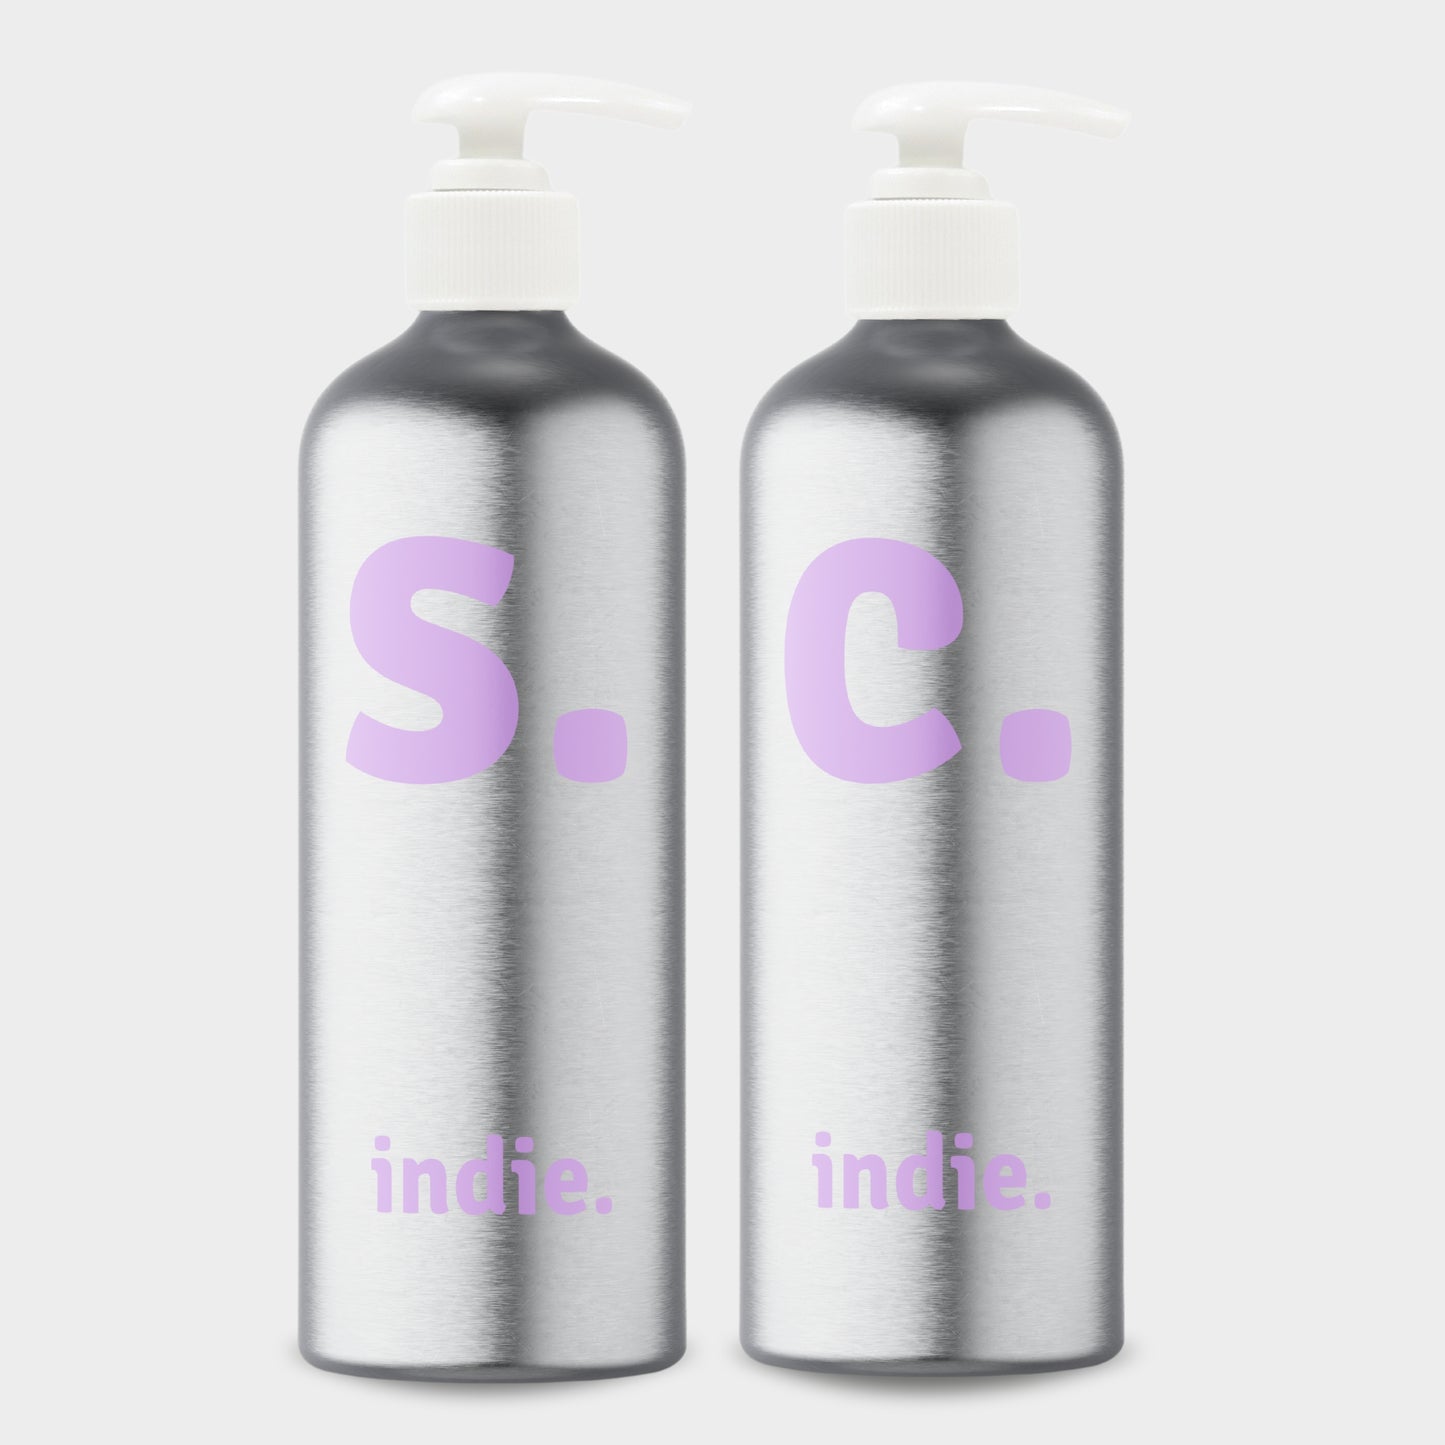 Refillable Shampoo & Conditioner Bottle Duo - Last Szn